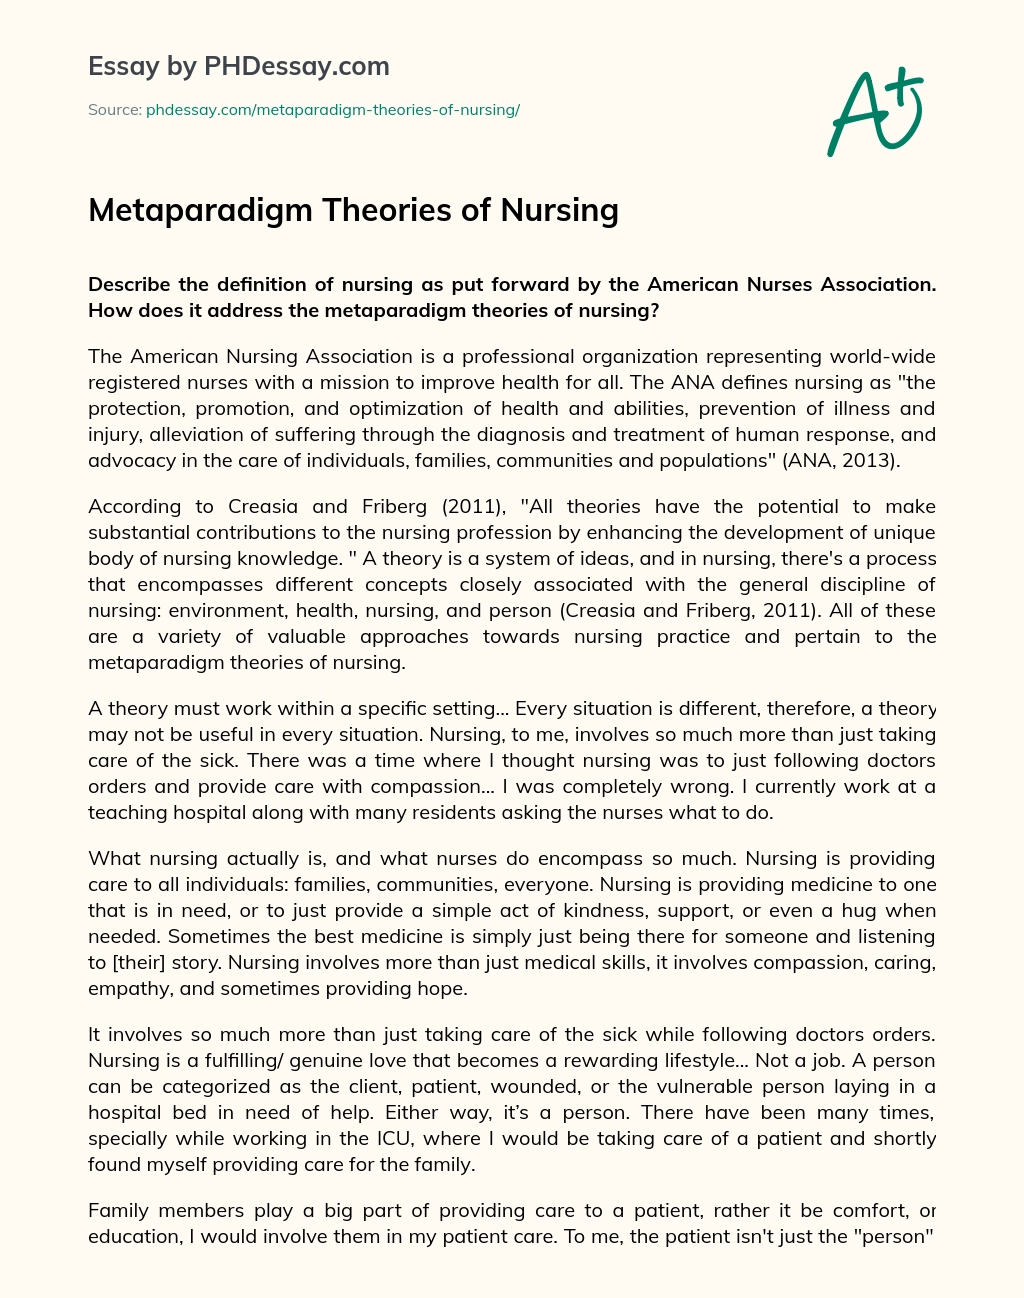 Metaparadigm Theories of Nursing essay